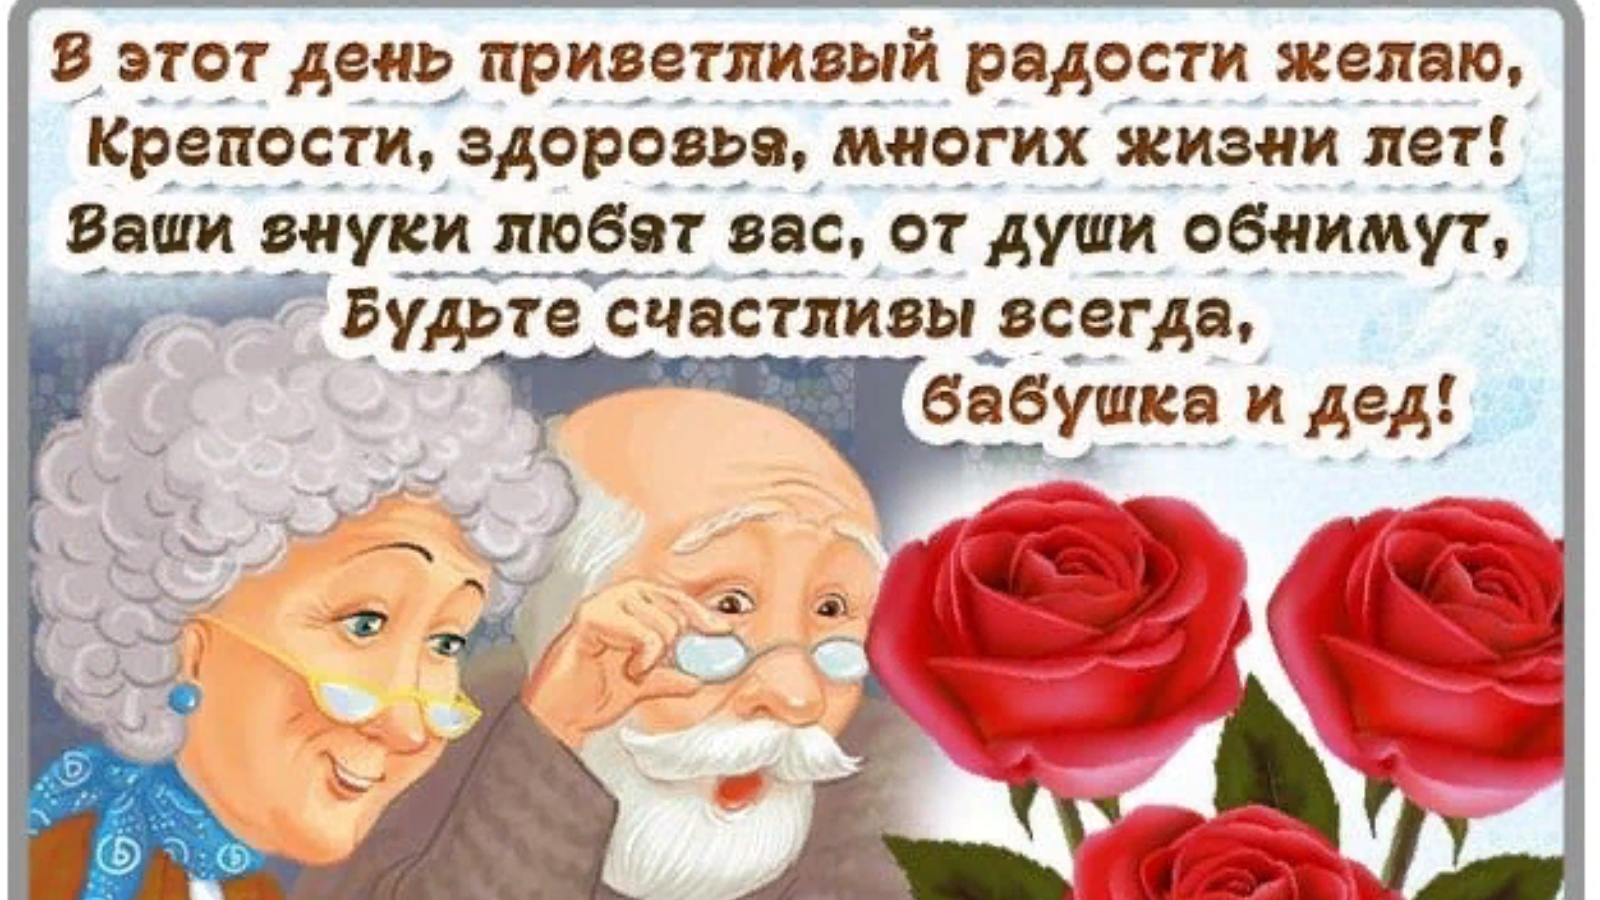 Когда день бабушек в беларуси. С днём бабушек и дедушек поздравления. Поздравление с днем бабушке идедушкк. Поздравление с днем Абушек идедушек. День бабушек и дедушек поз.